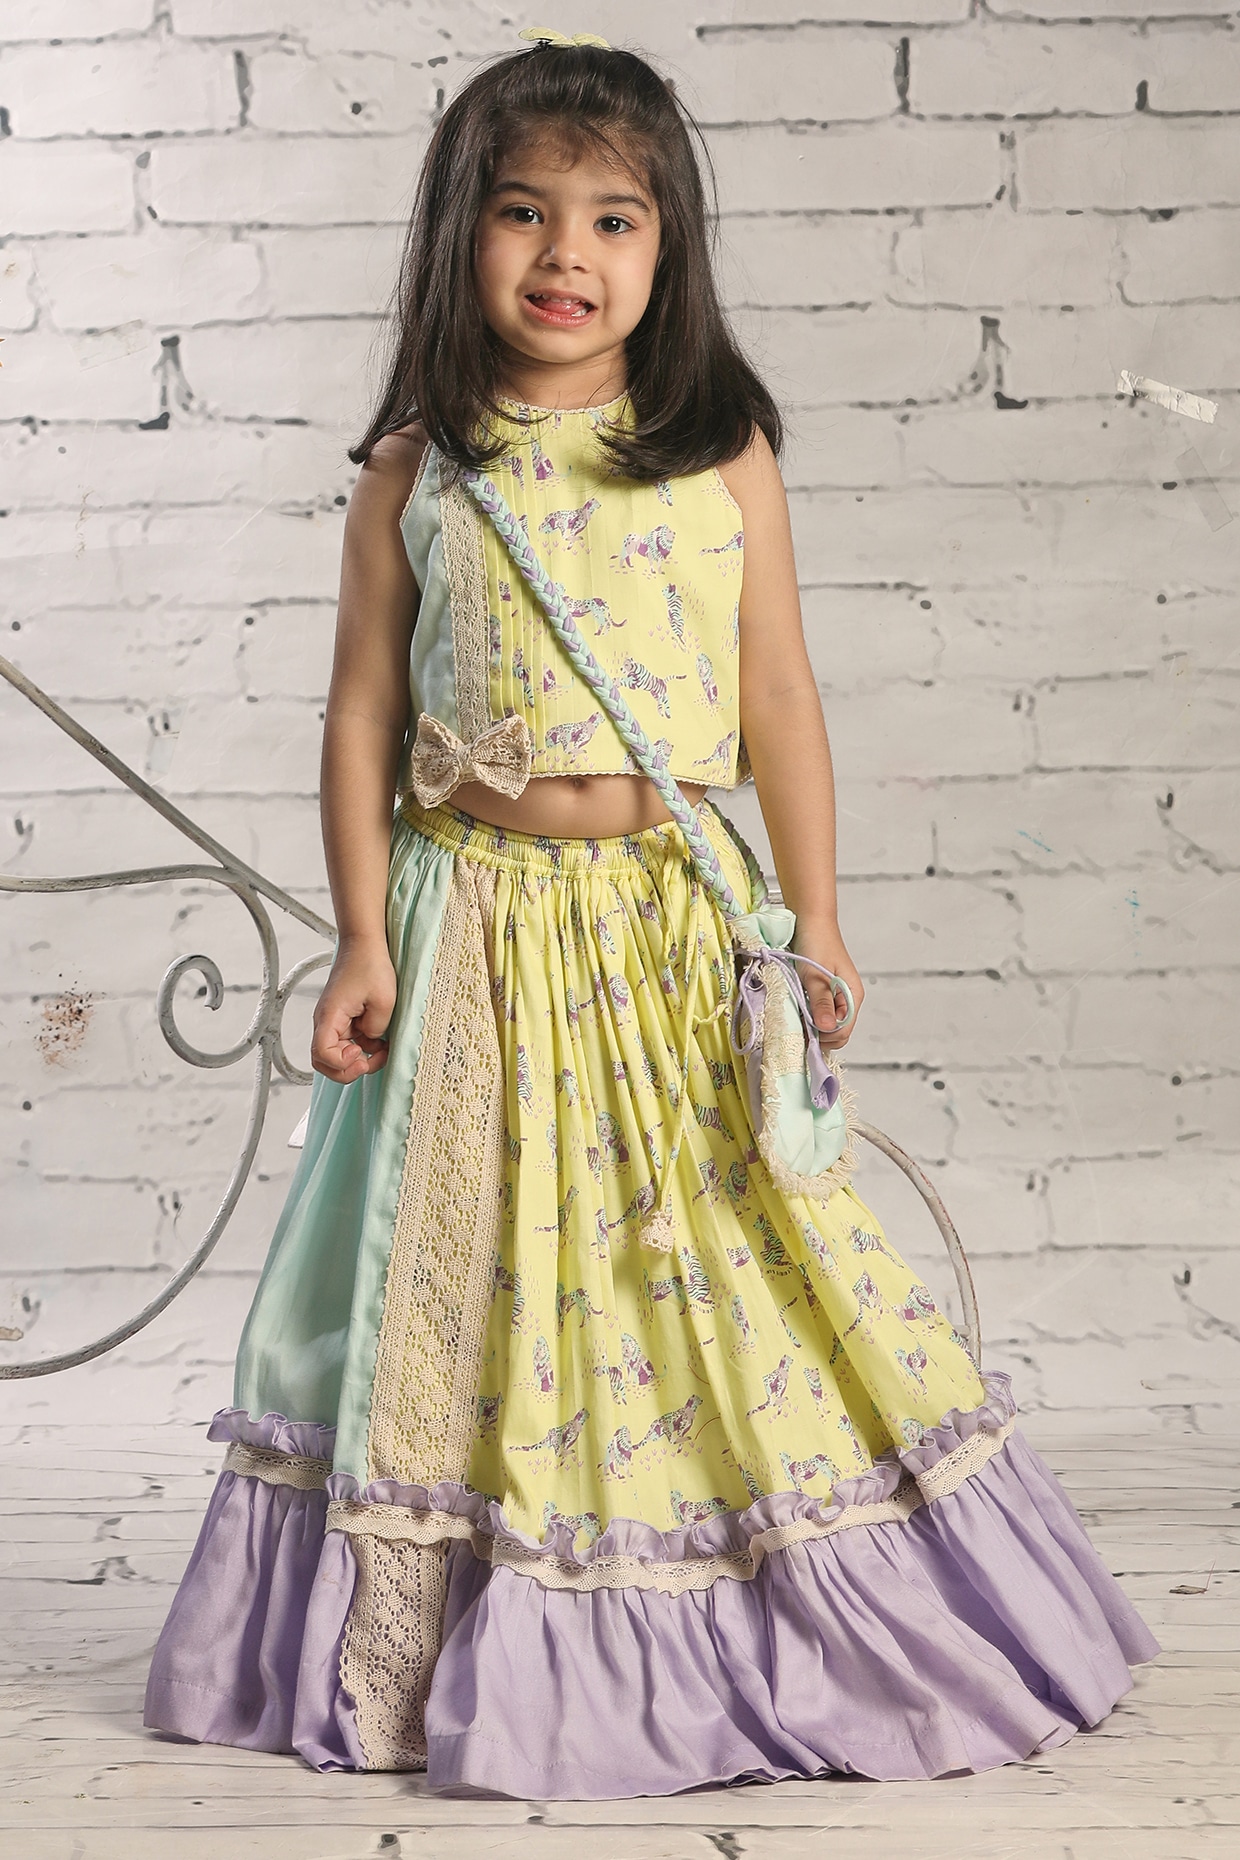 Canvert Old Saree into Baby /kids lehenga choli designs//baby girls lehenga  designs - YouTube